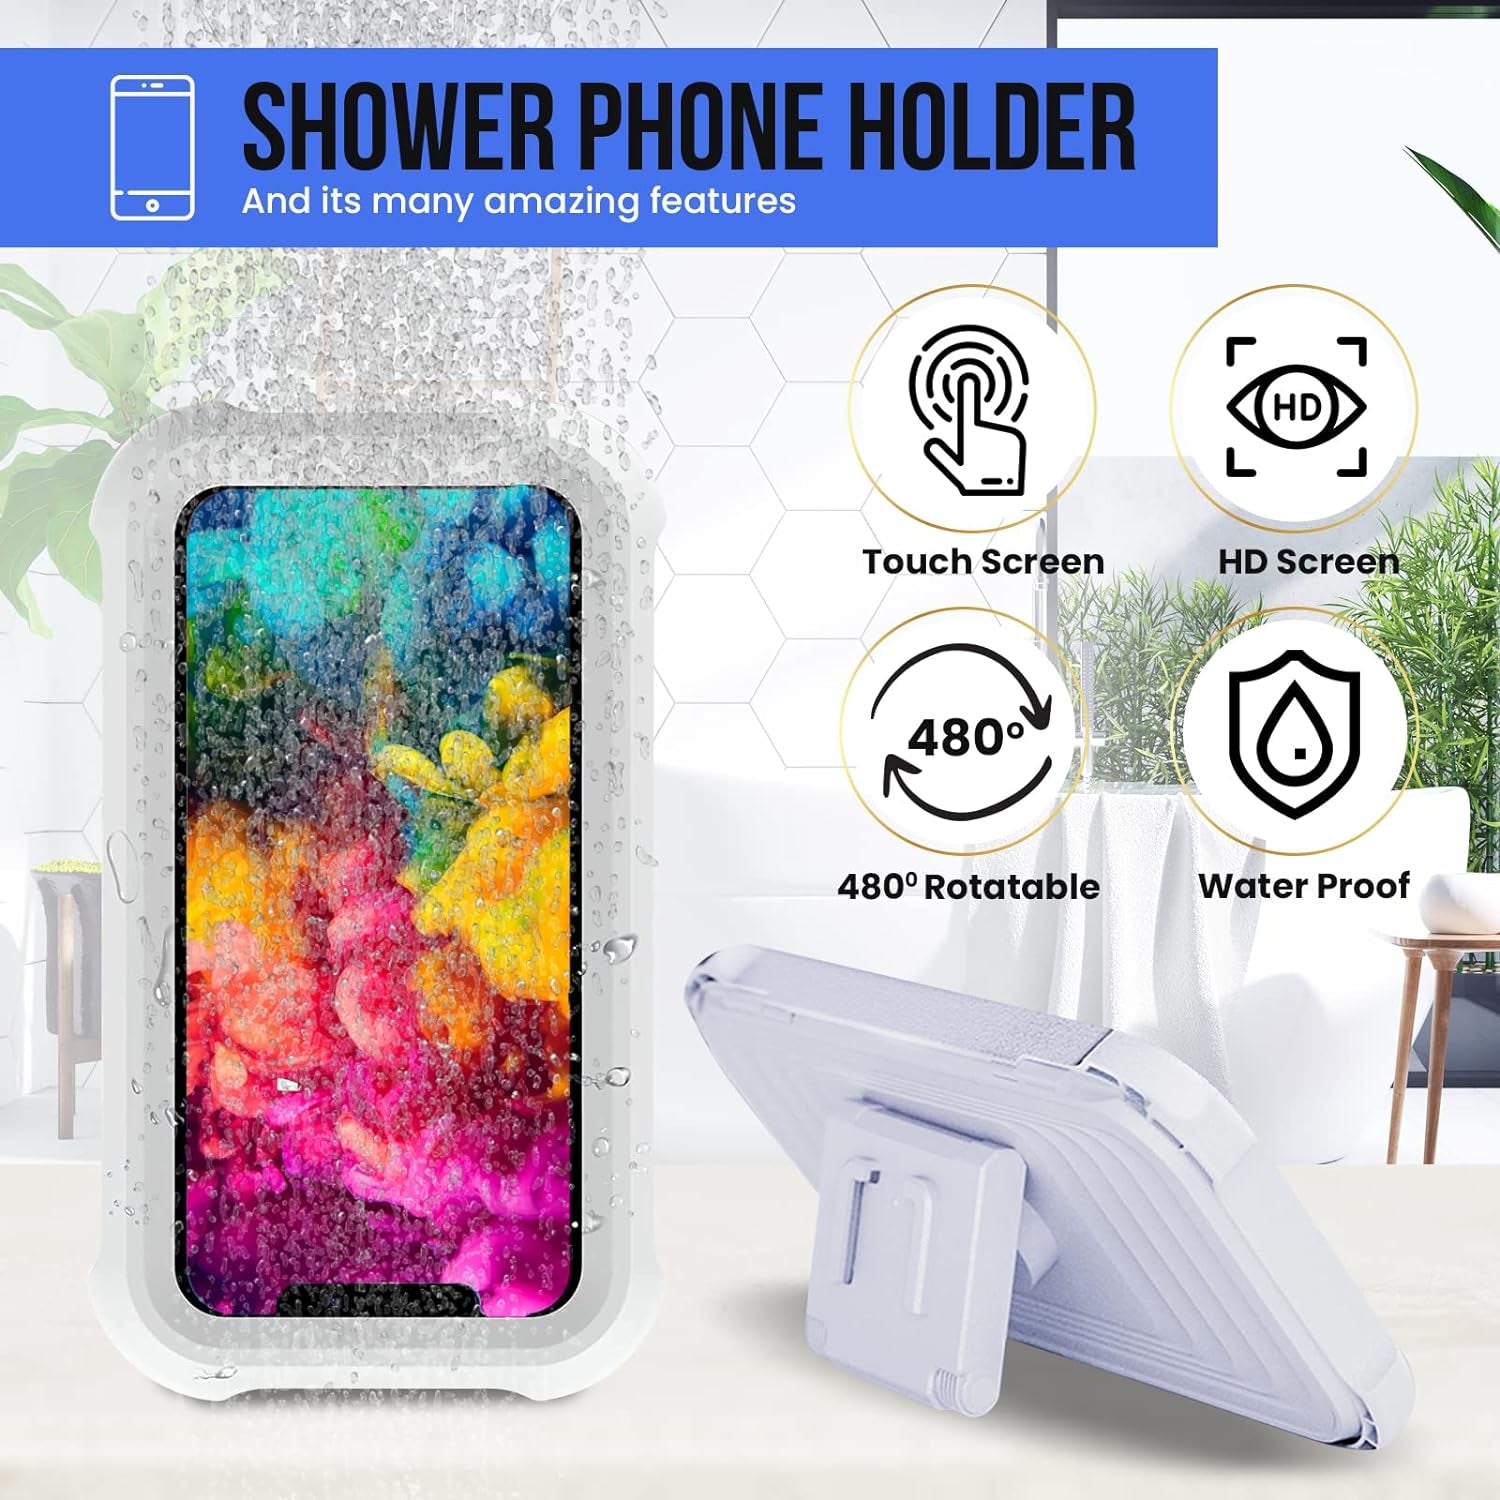 Upgraded 480° Rotating Shower Phone Holder Waterproof Phone Shower Holder Wall Mount Bathroom TV Shower Gadget Shower Accessory Phone Mount Iphone (Pure White)